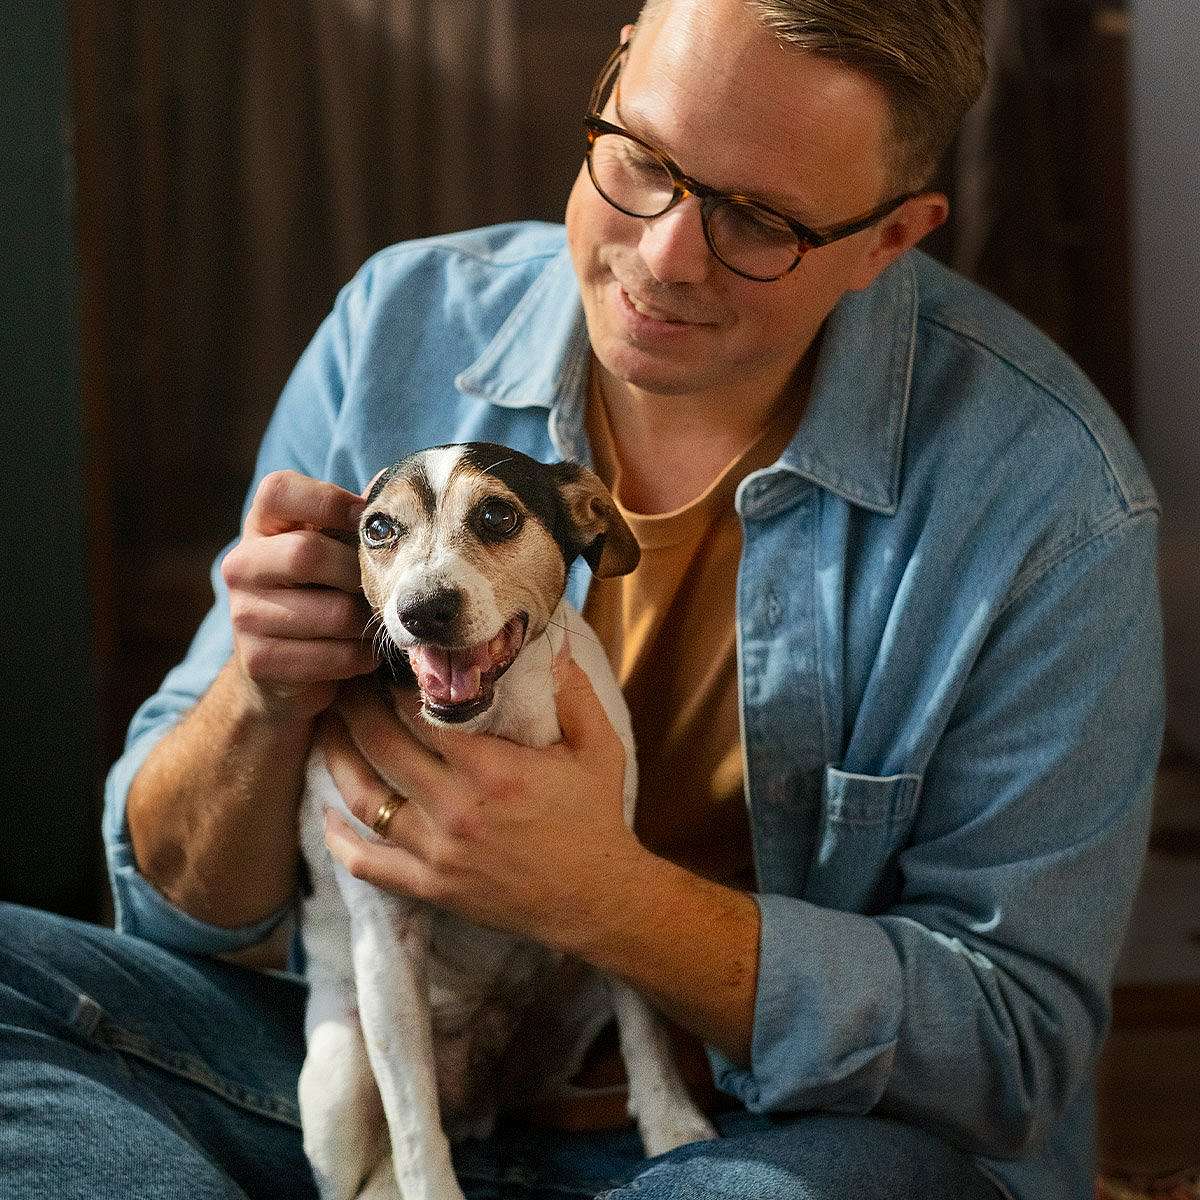 Man cuddles with dog